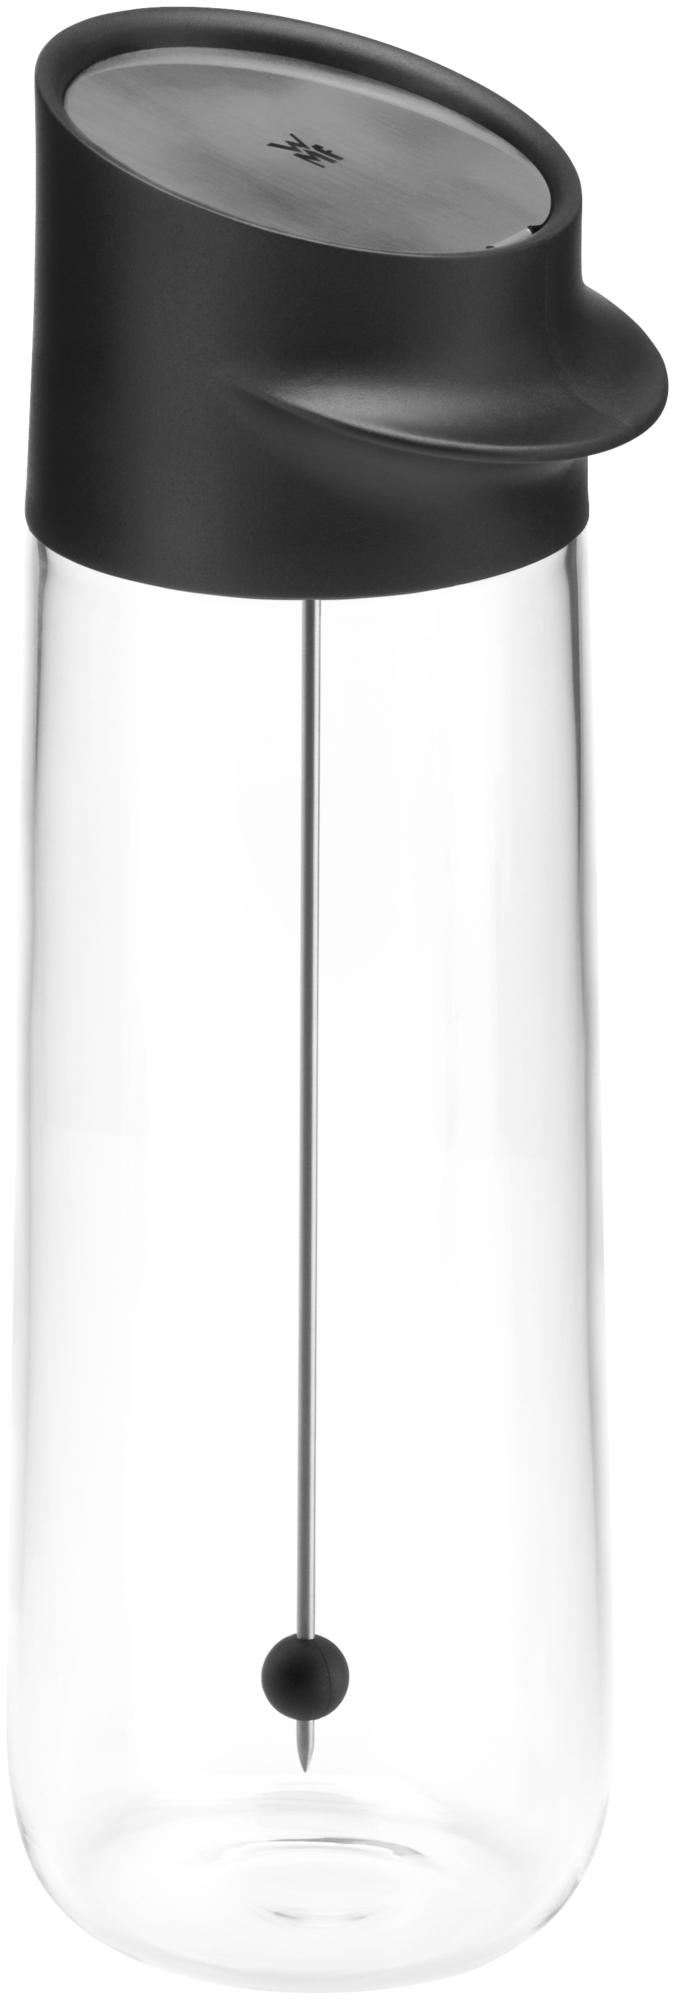 Nuro water decanter with fruit skewer